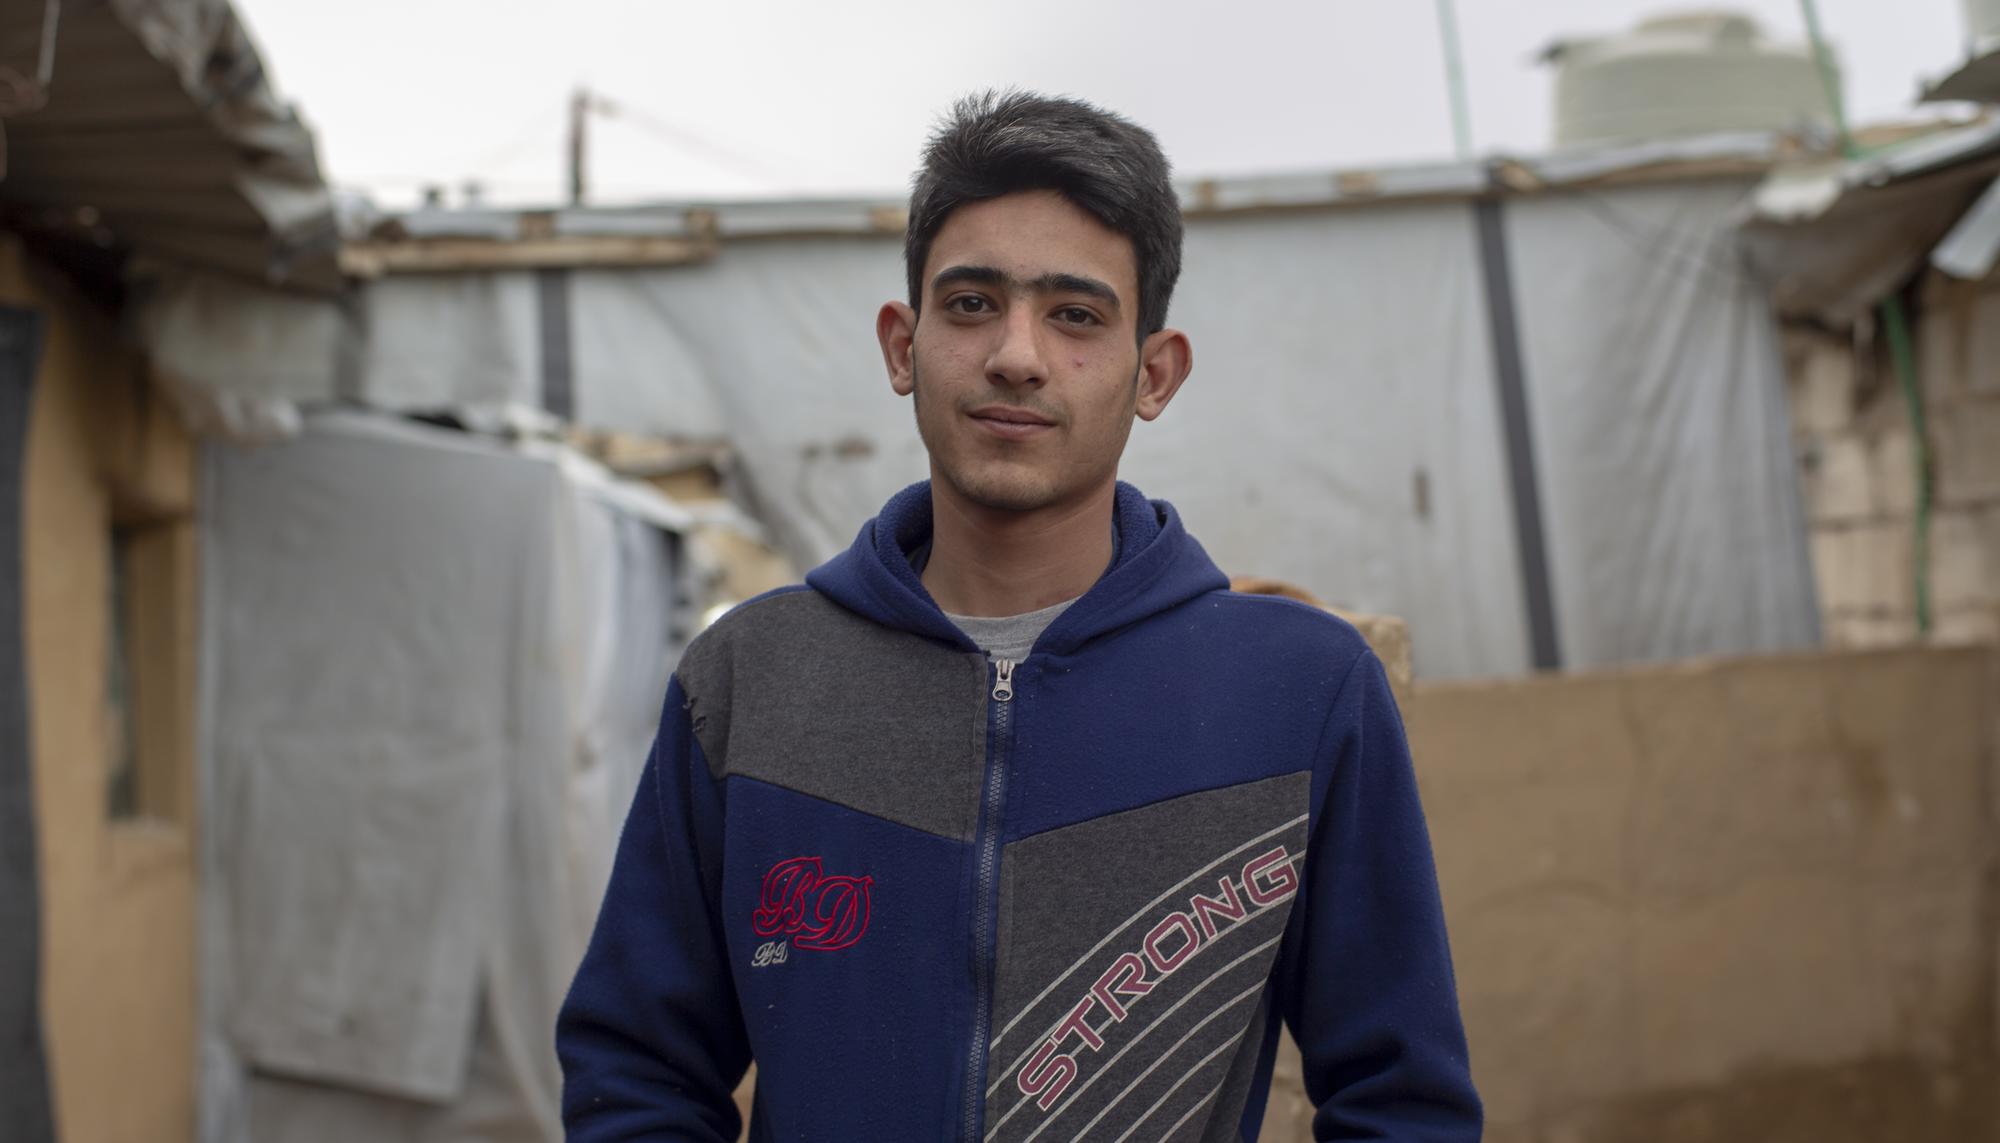 Ahmad refugiado sirio